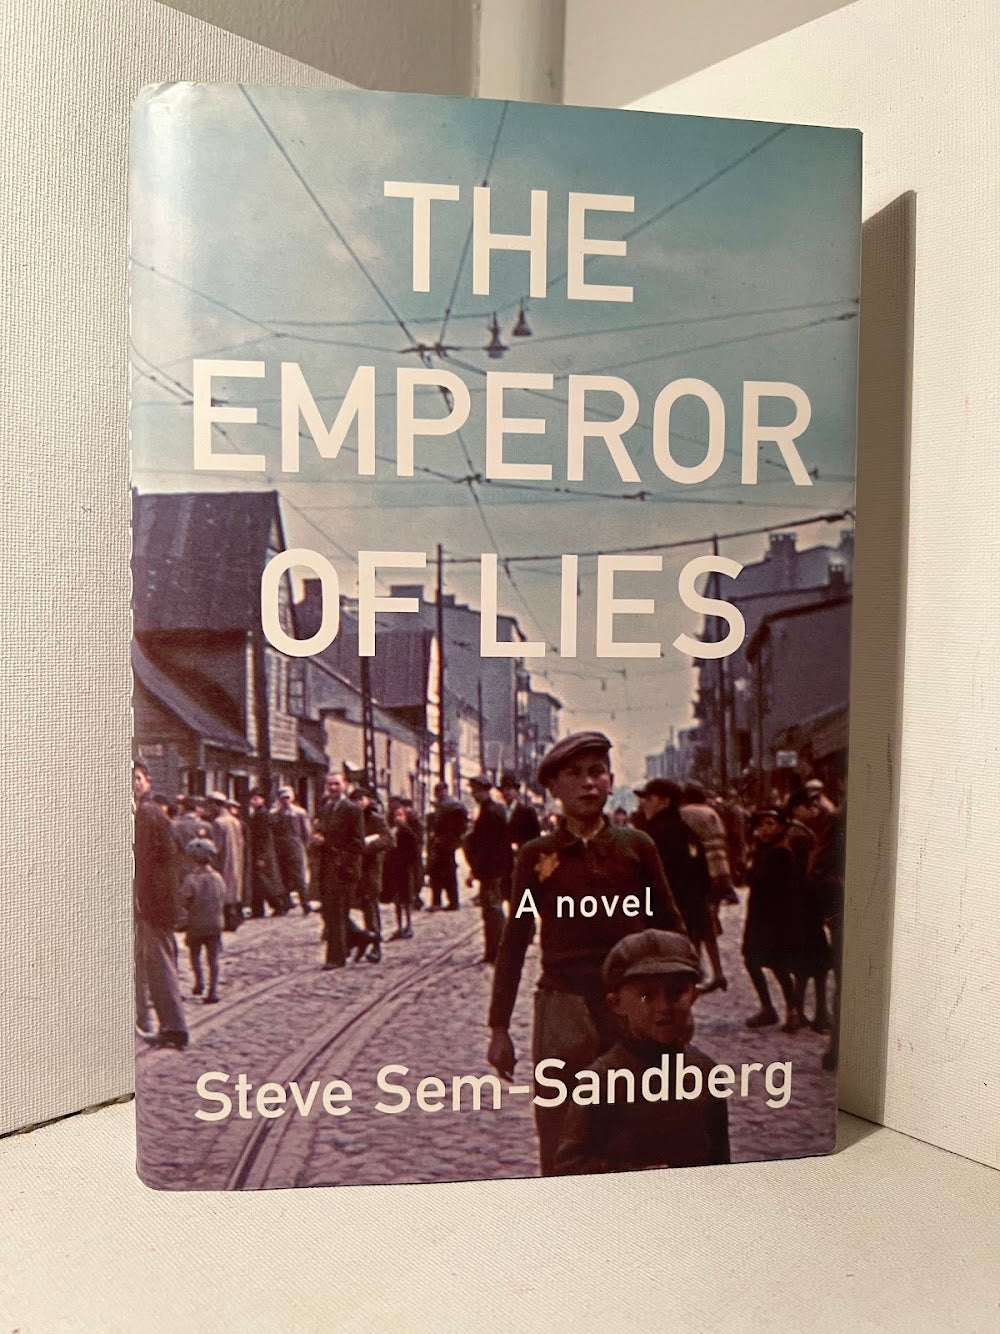 The Emperor of Lies by Steve Sem-Sandberg